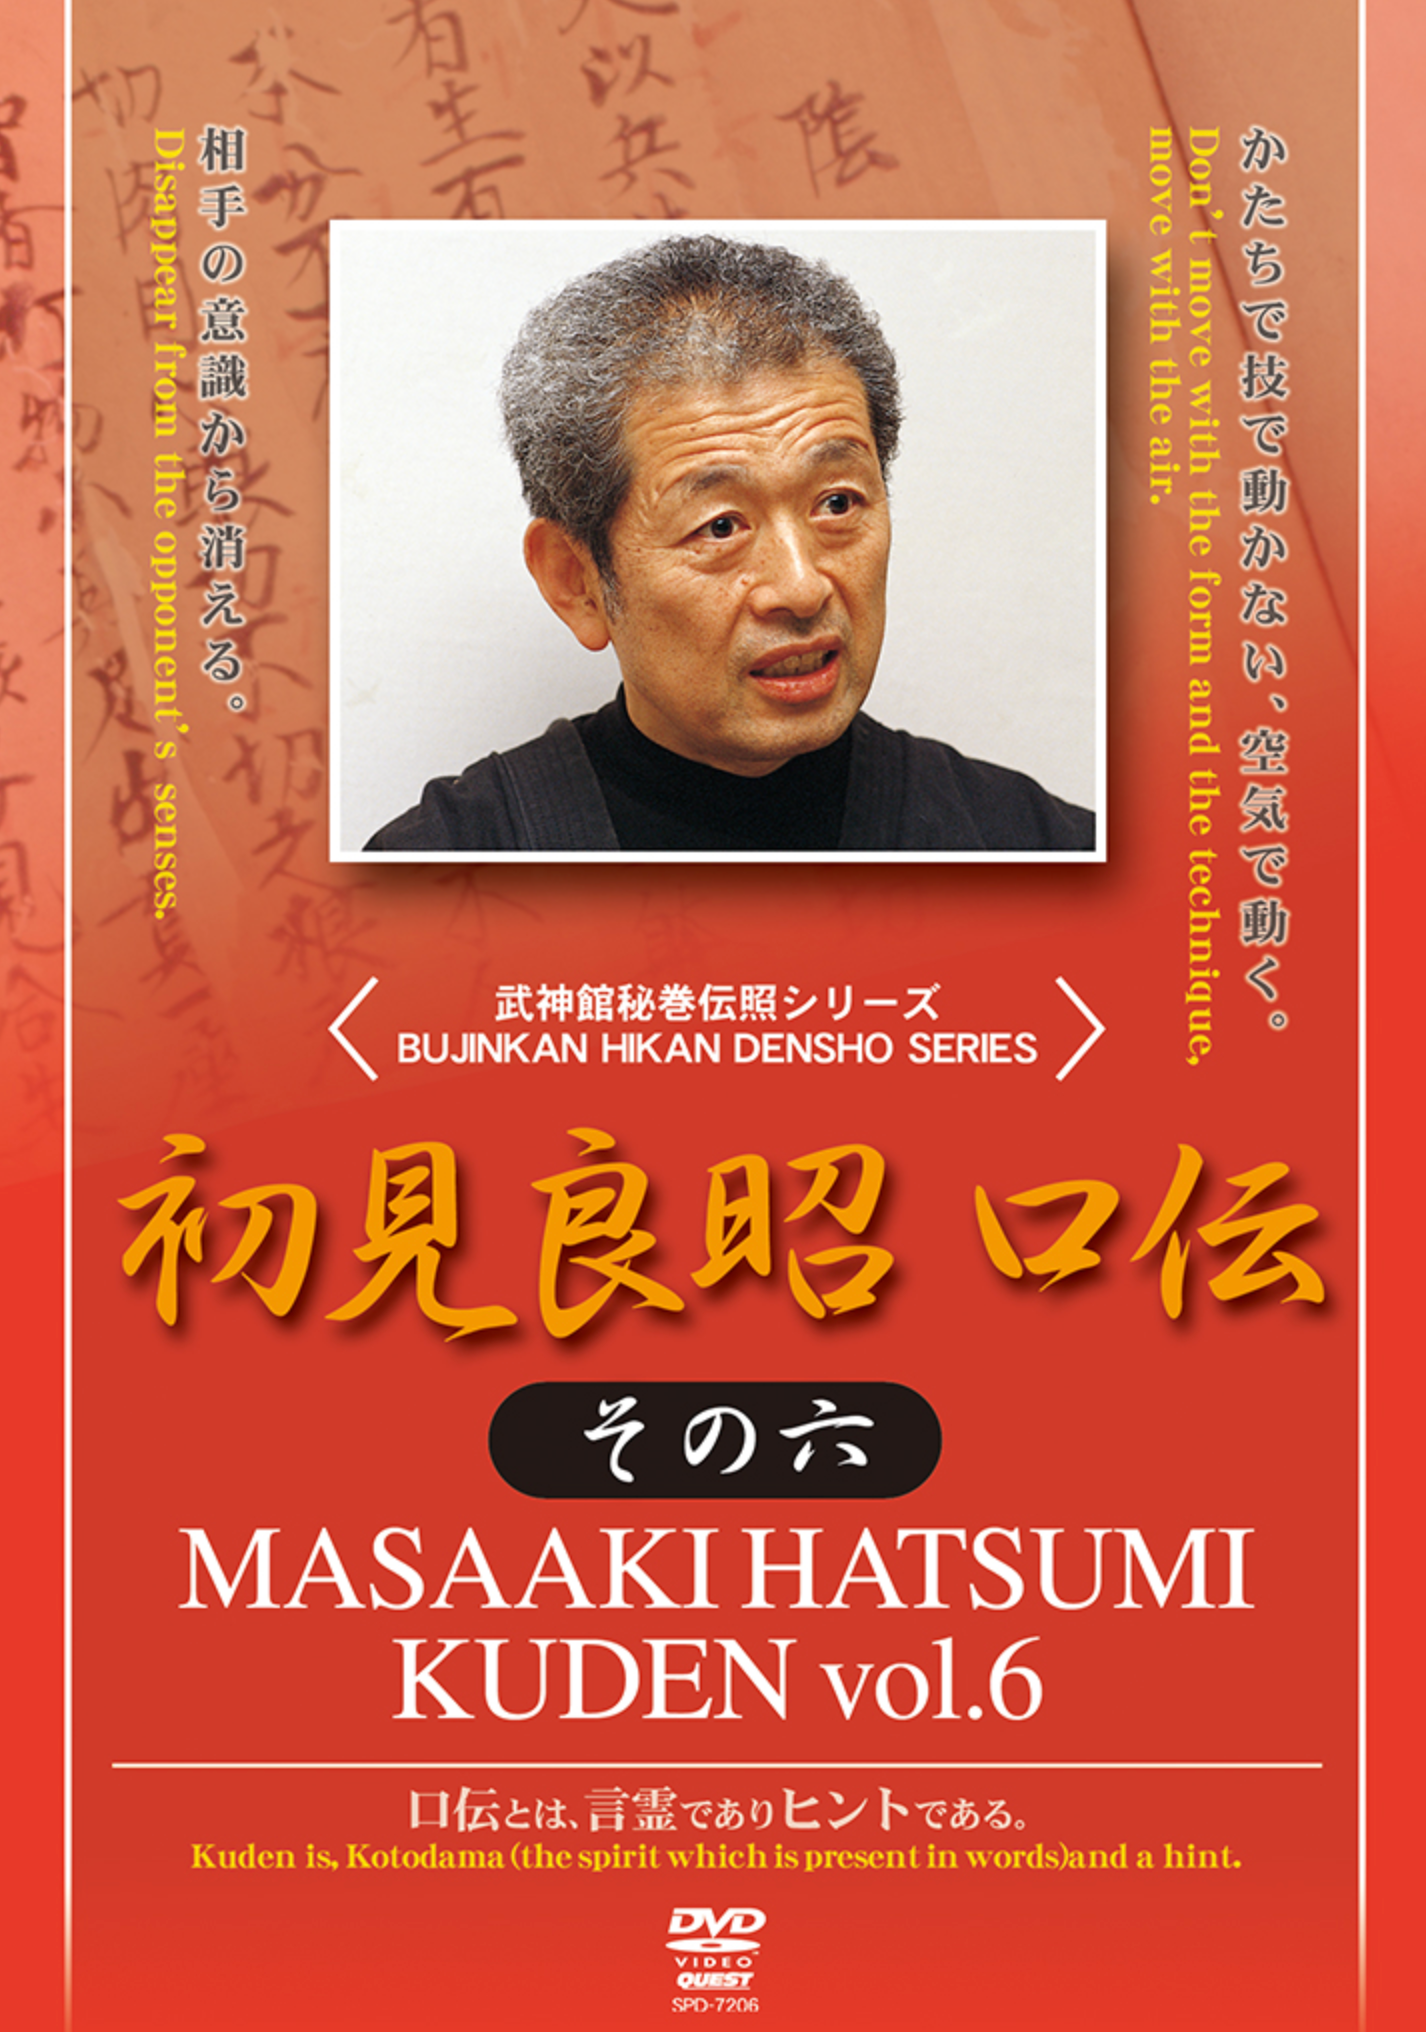 Kuden Vol 6 DVD with Masaaki Hatsumi - Budovideos Inc